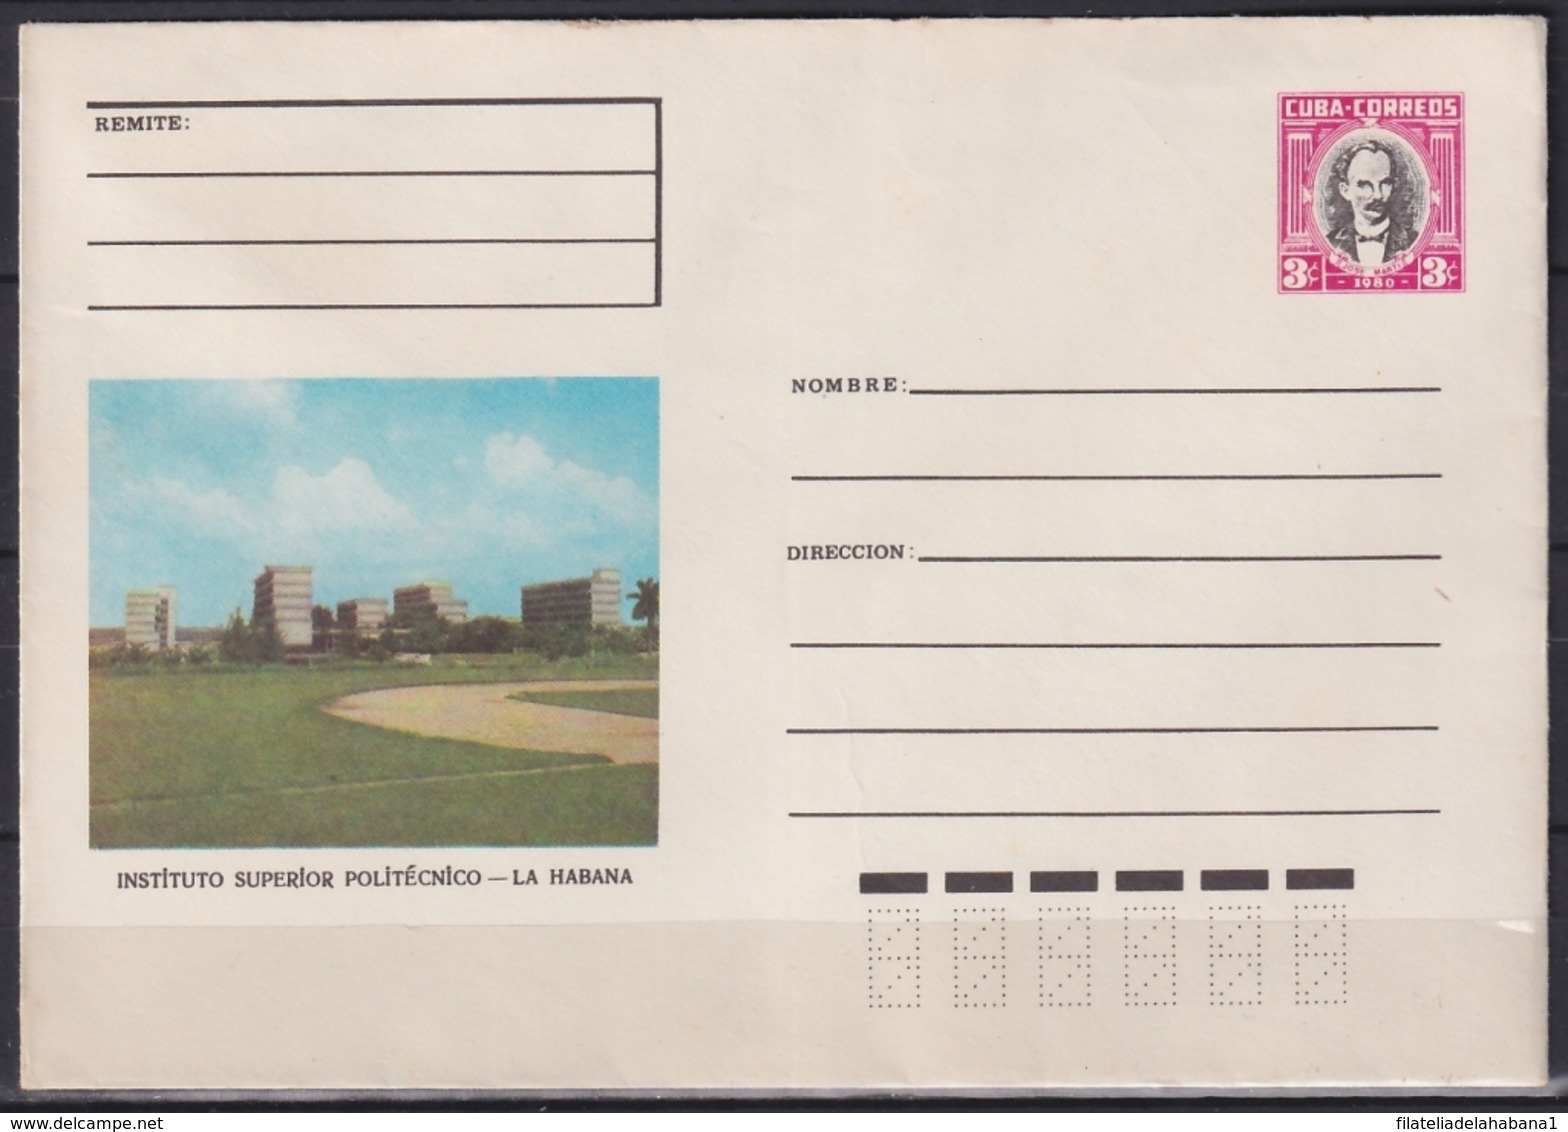 1980-EP-151 CUBA 1980 3c POSTAL STATIONERY COVER. HAVANA, INSTITUTO SUPERIOR POLITECNICO. - Storia Postale